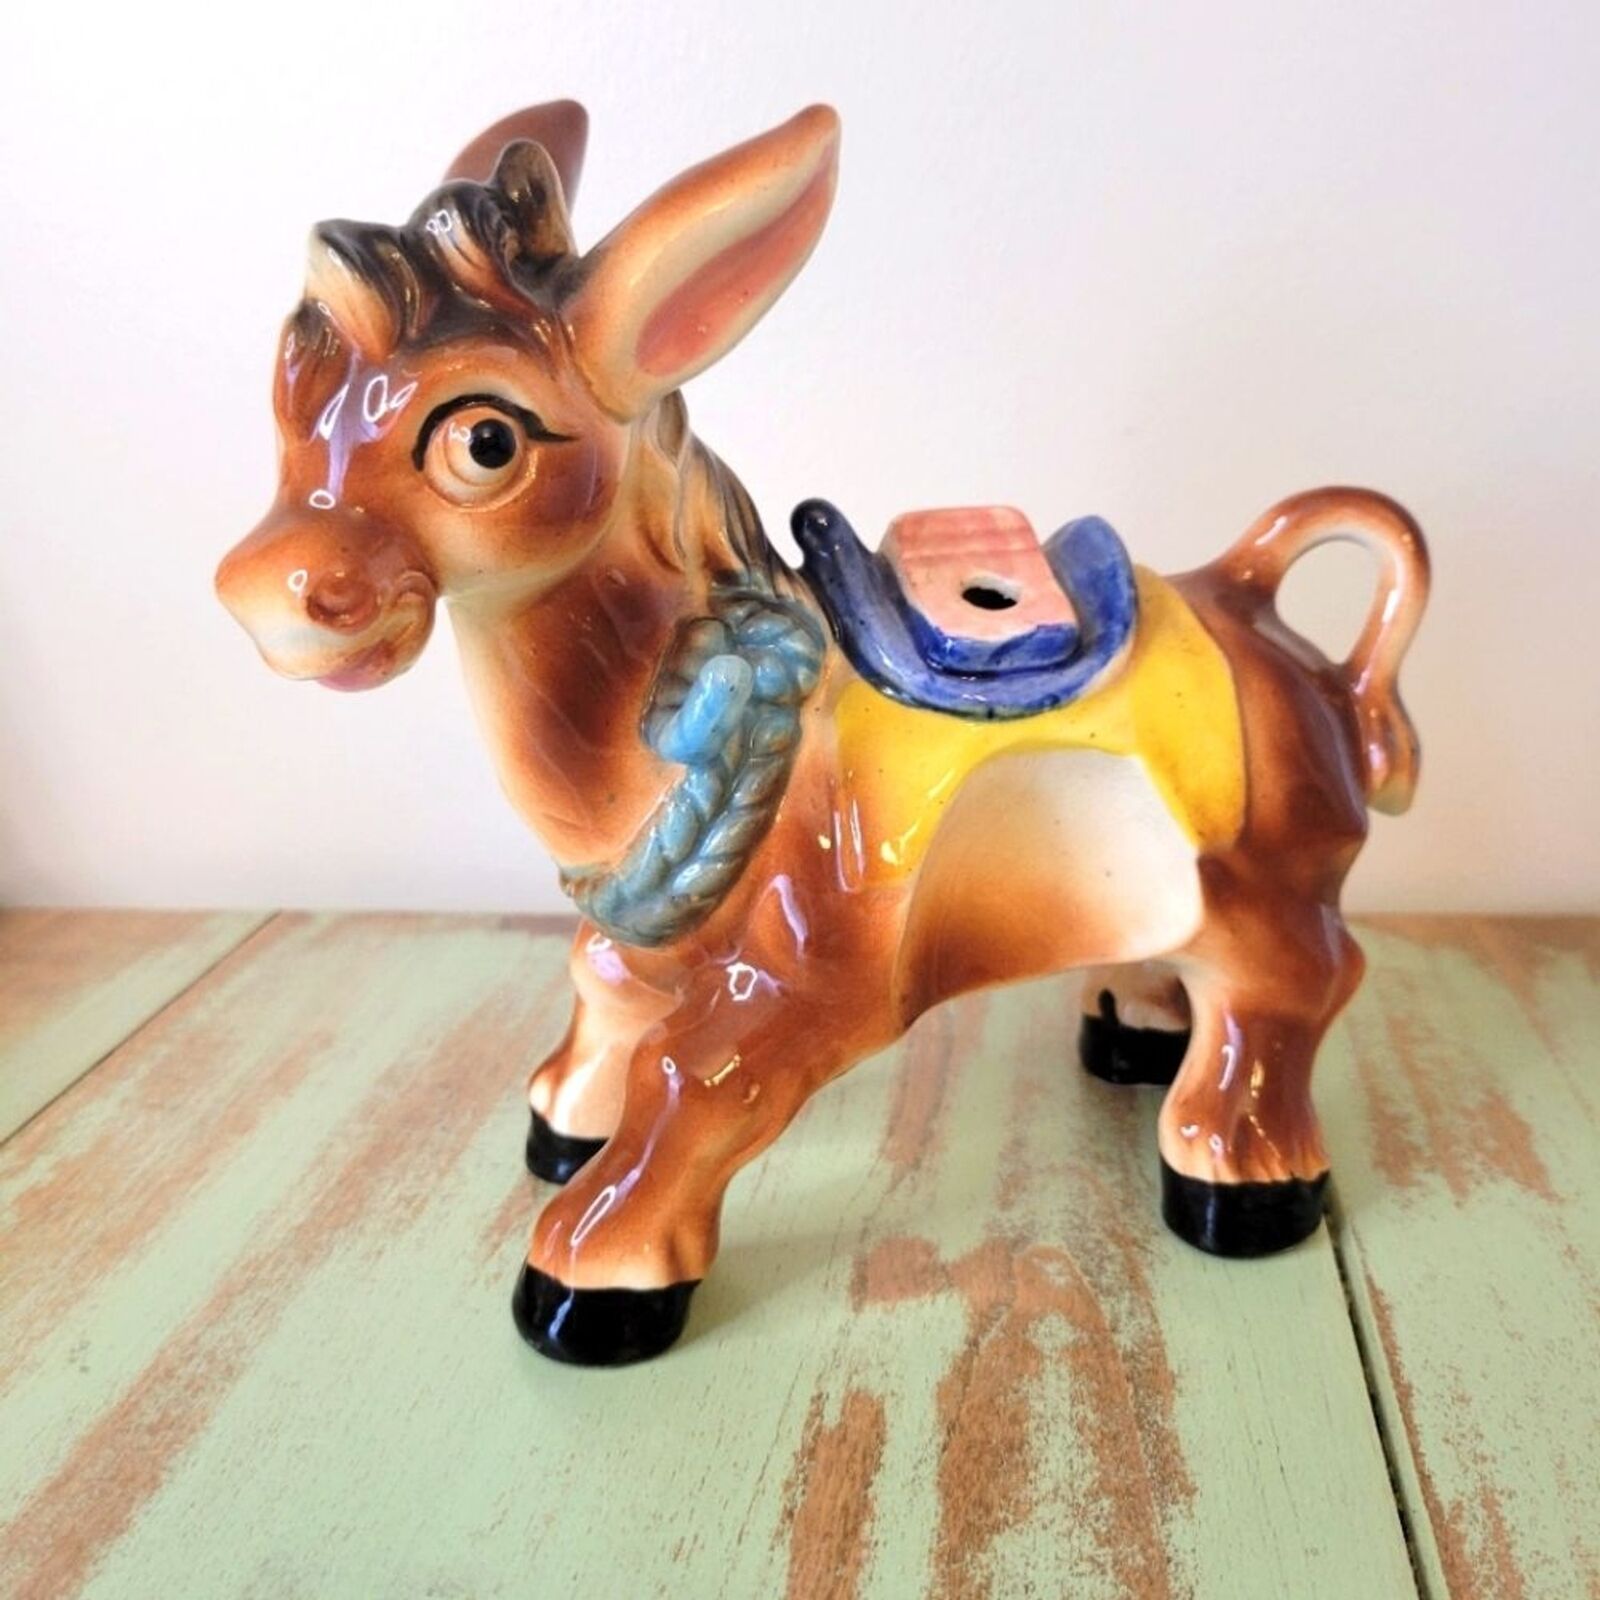 Vintage Anthropomorphic MCM Donkey Figurine with Big Eyes - Atomic Kitsch